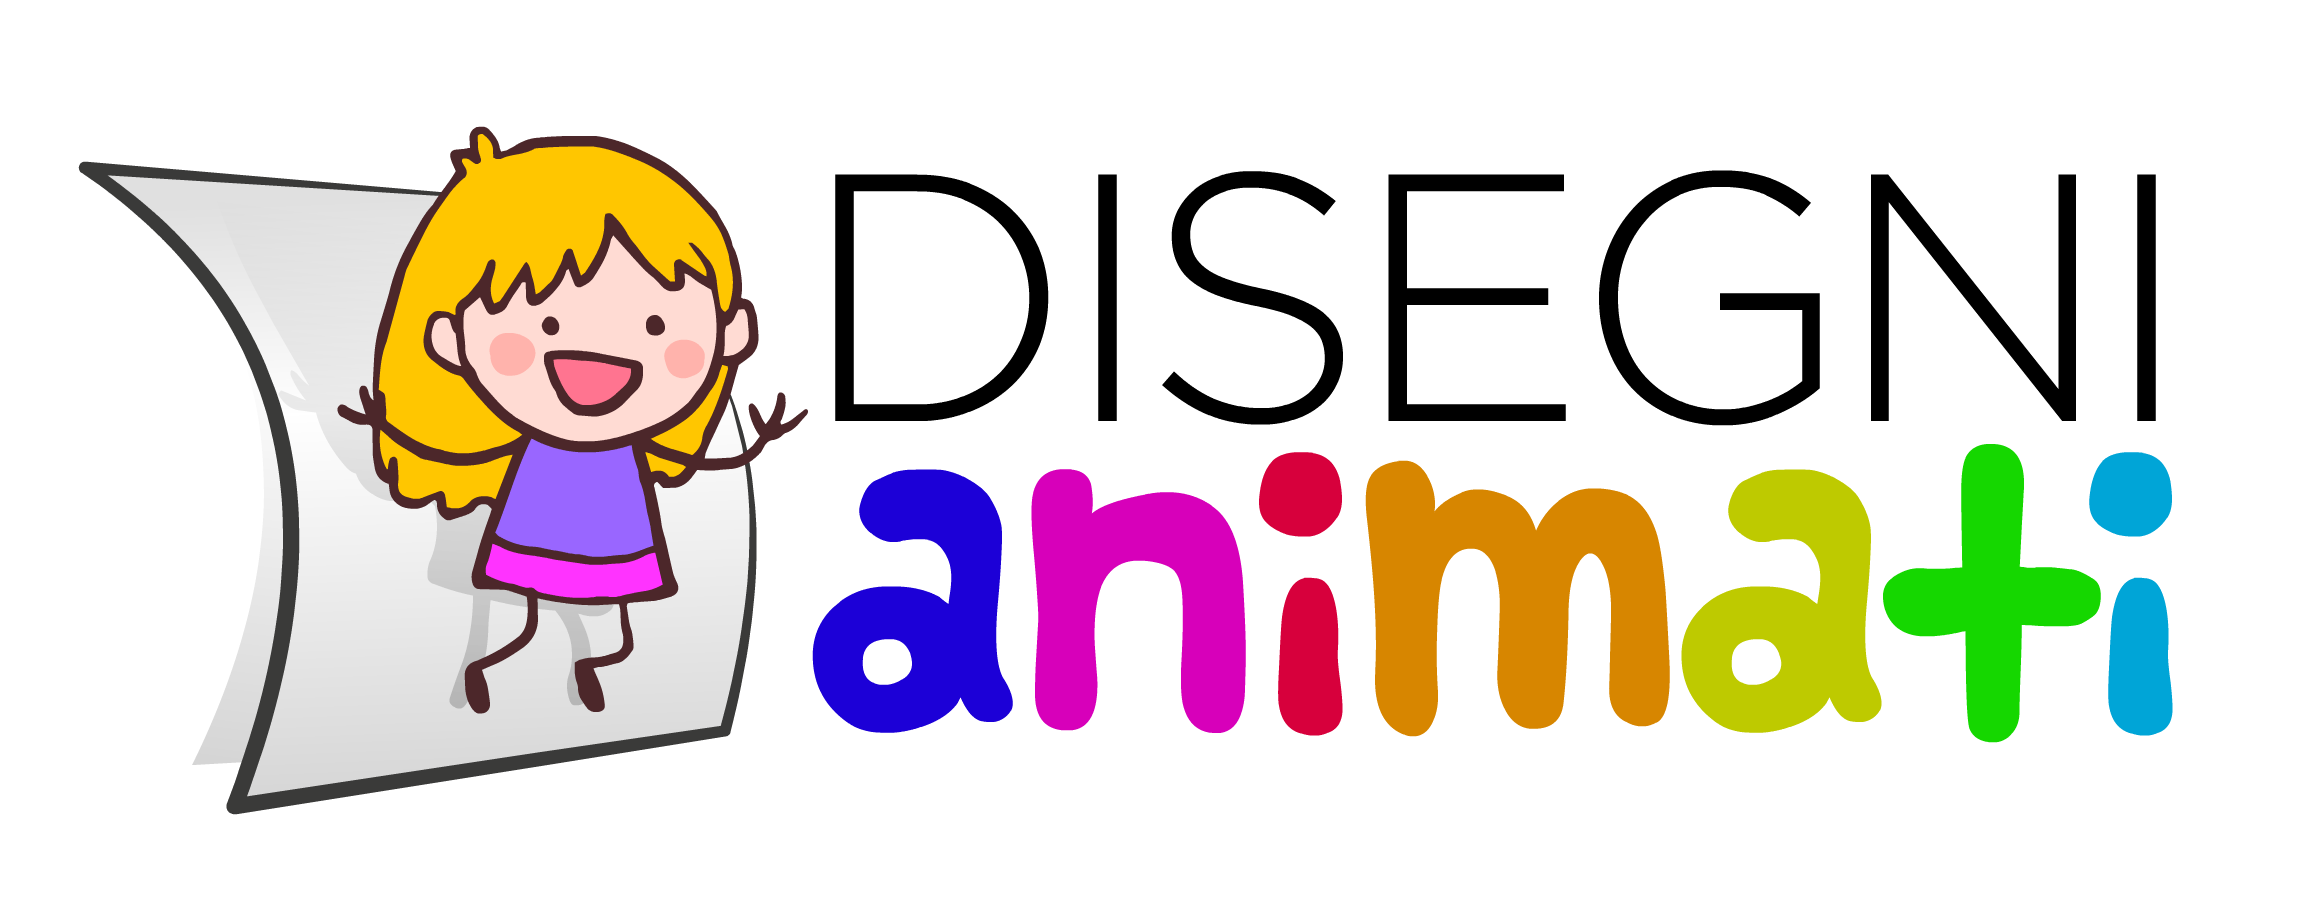 Disegni Animati Disegni Animati